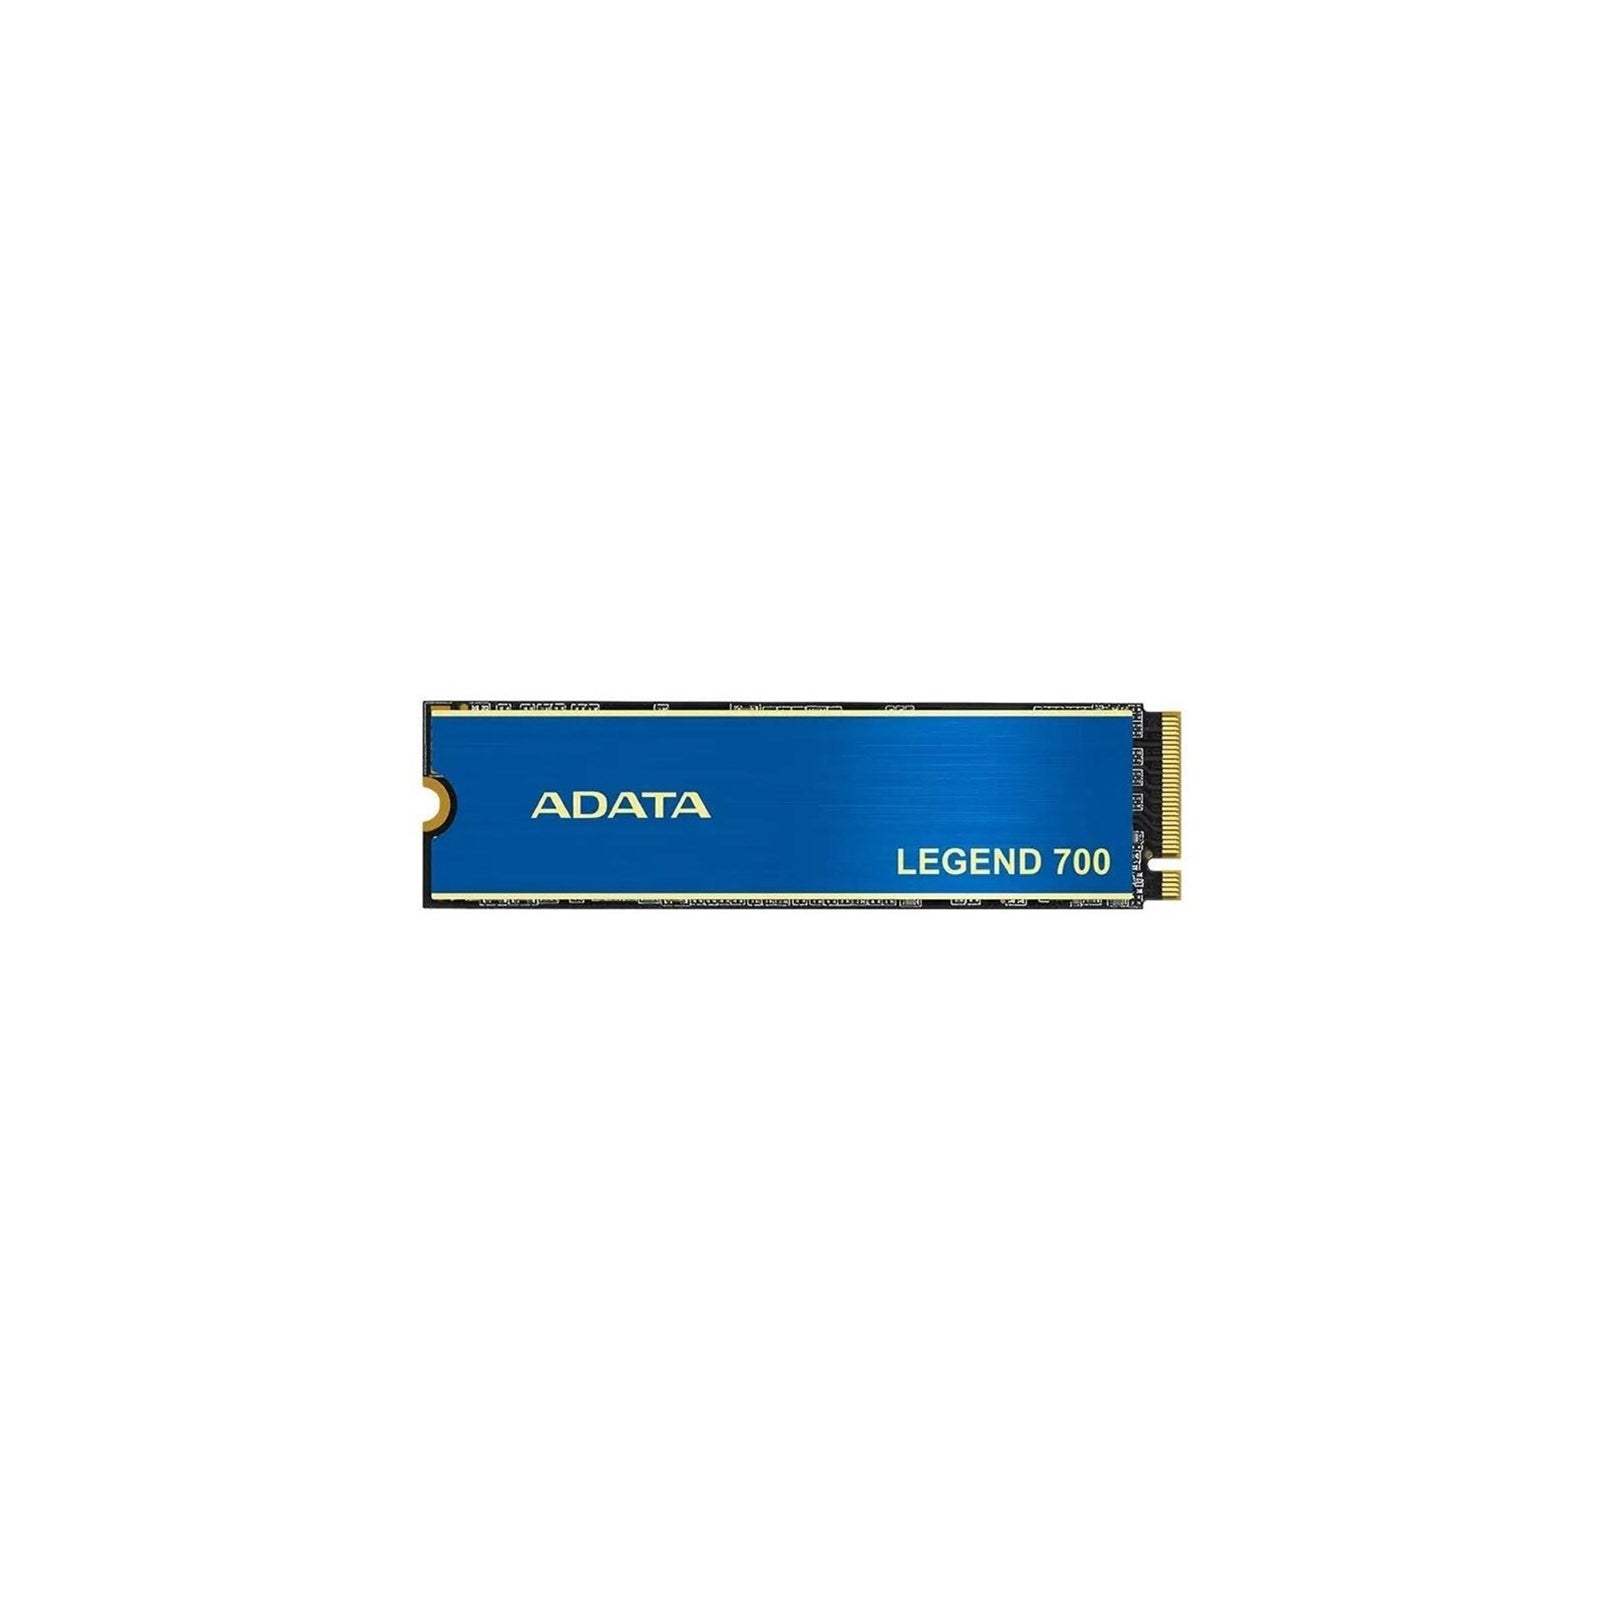 ADATA Legend 700 512GB High-Speed M.2 NVMe SSD with Heatsink